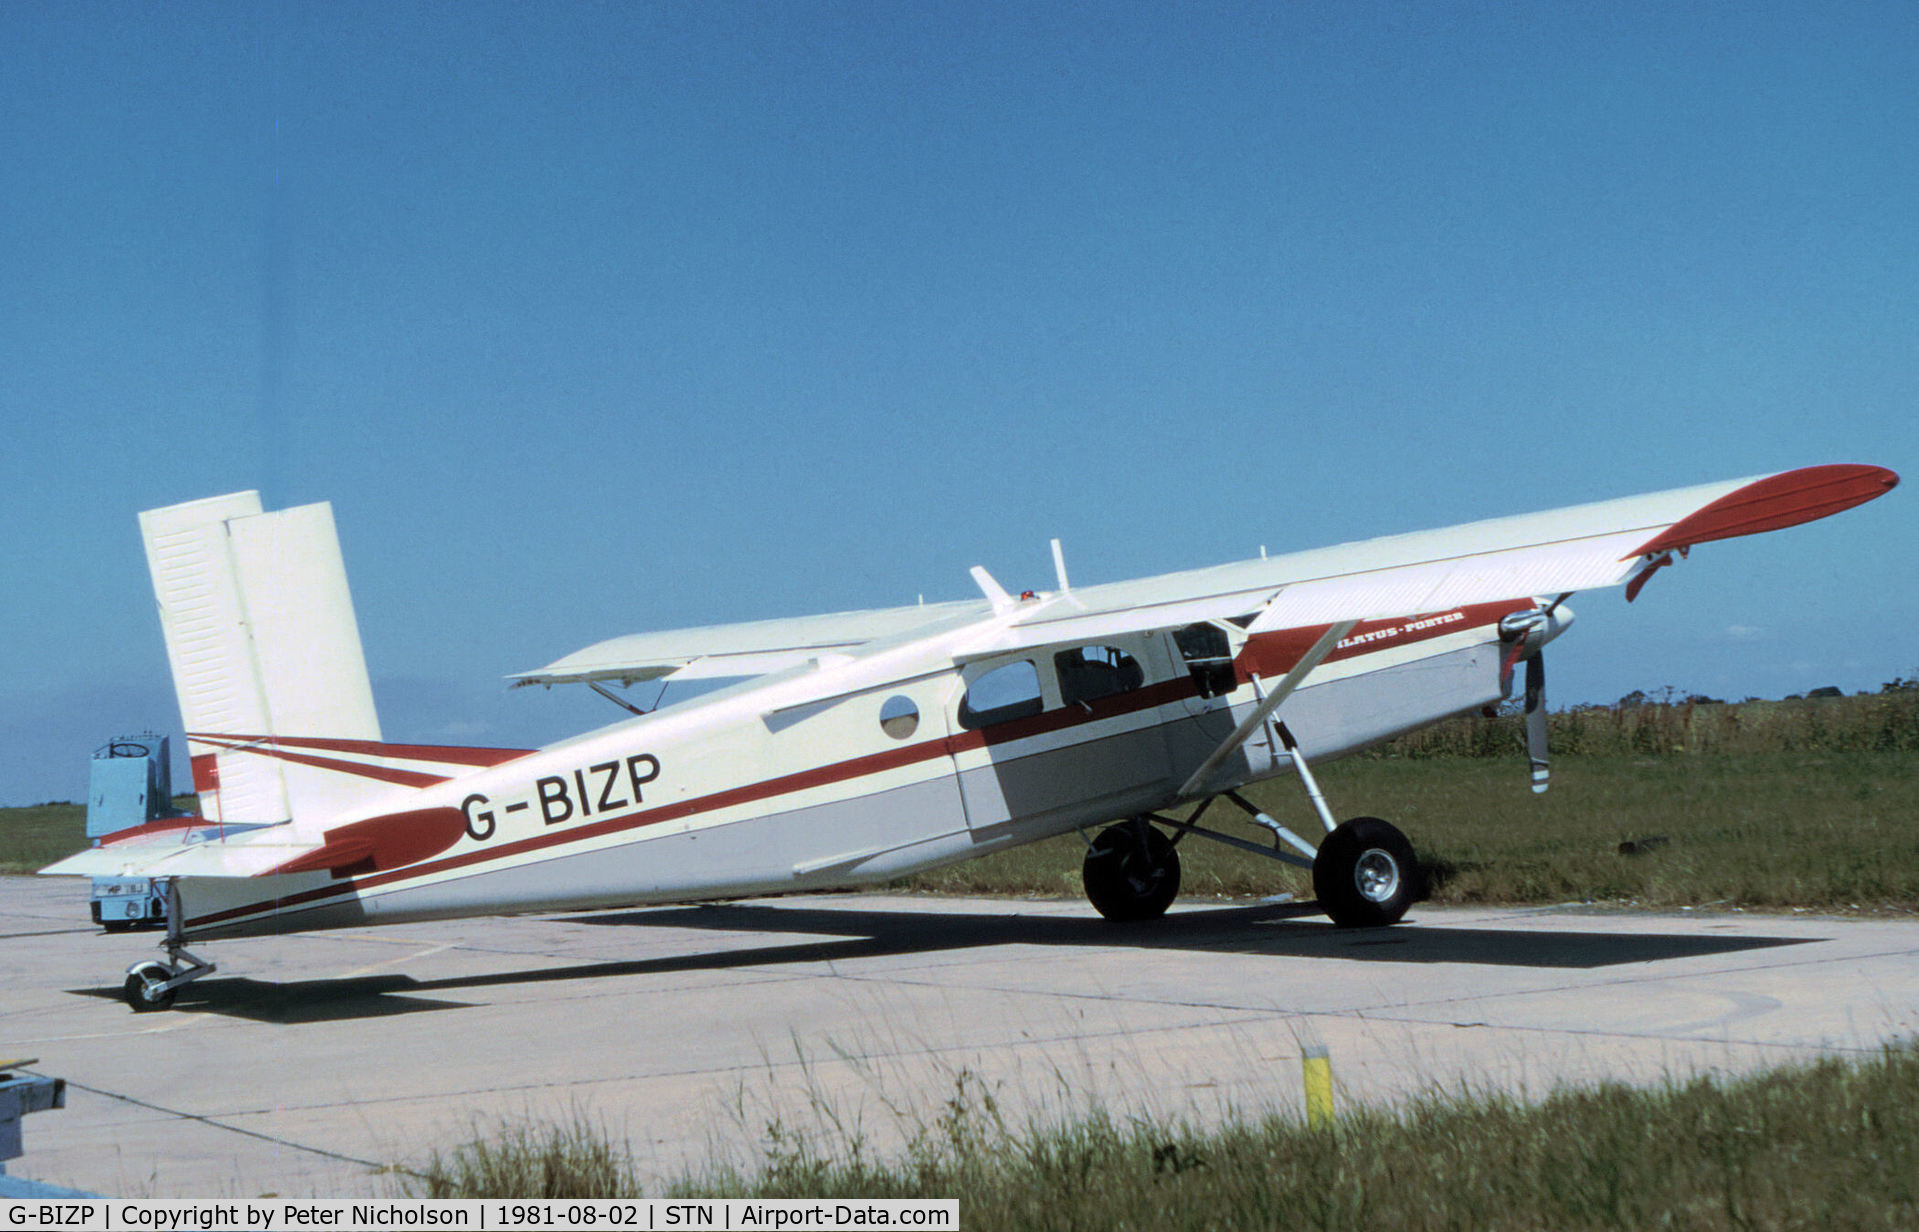 G-BIZP, 1981 Pilatus PC-6/B2-H2 Turbo Porter C/N 812, Pilatus Turbo-Porter as seen at Stansted in th Summer of 1981.